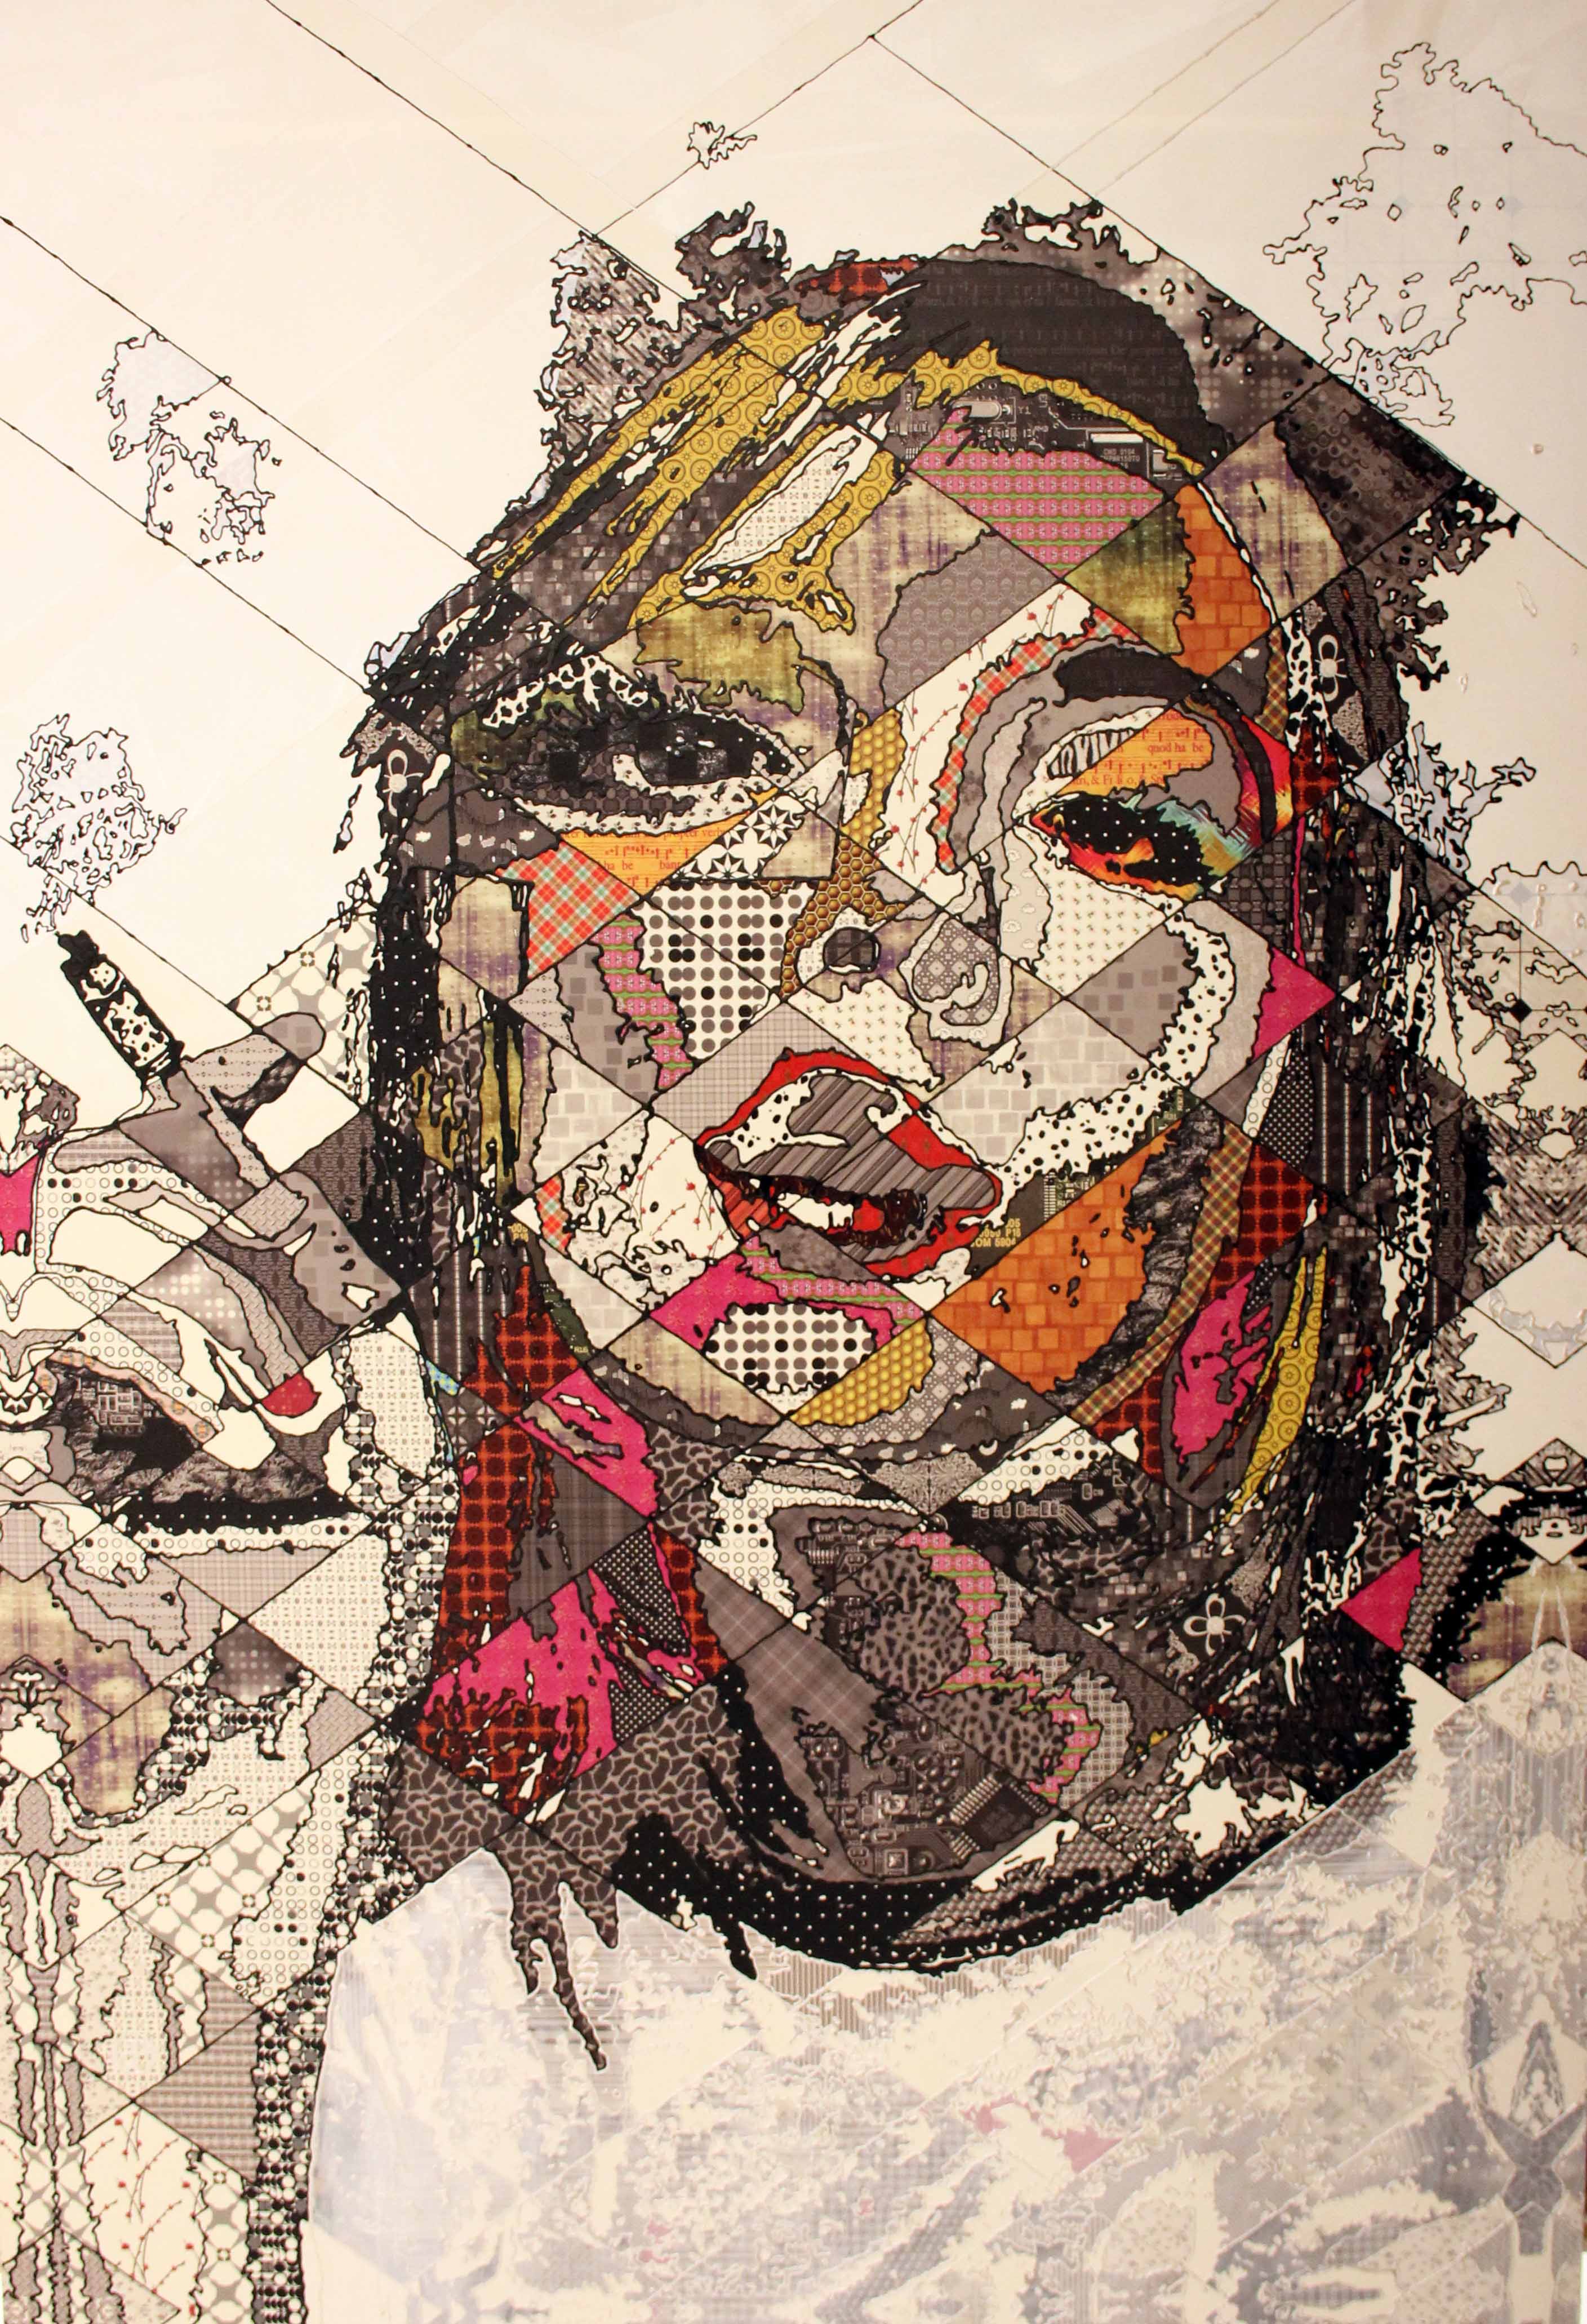 İsimsiz- Untitled, 2013, Tuval üzerine karışık teknik- Mixed media on canvas, 190x130 cm.